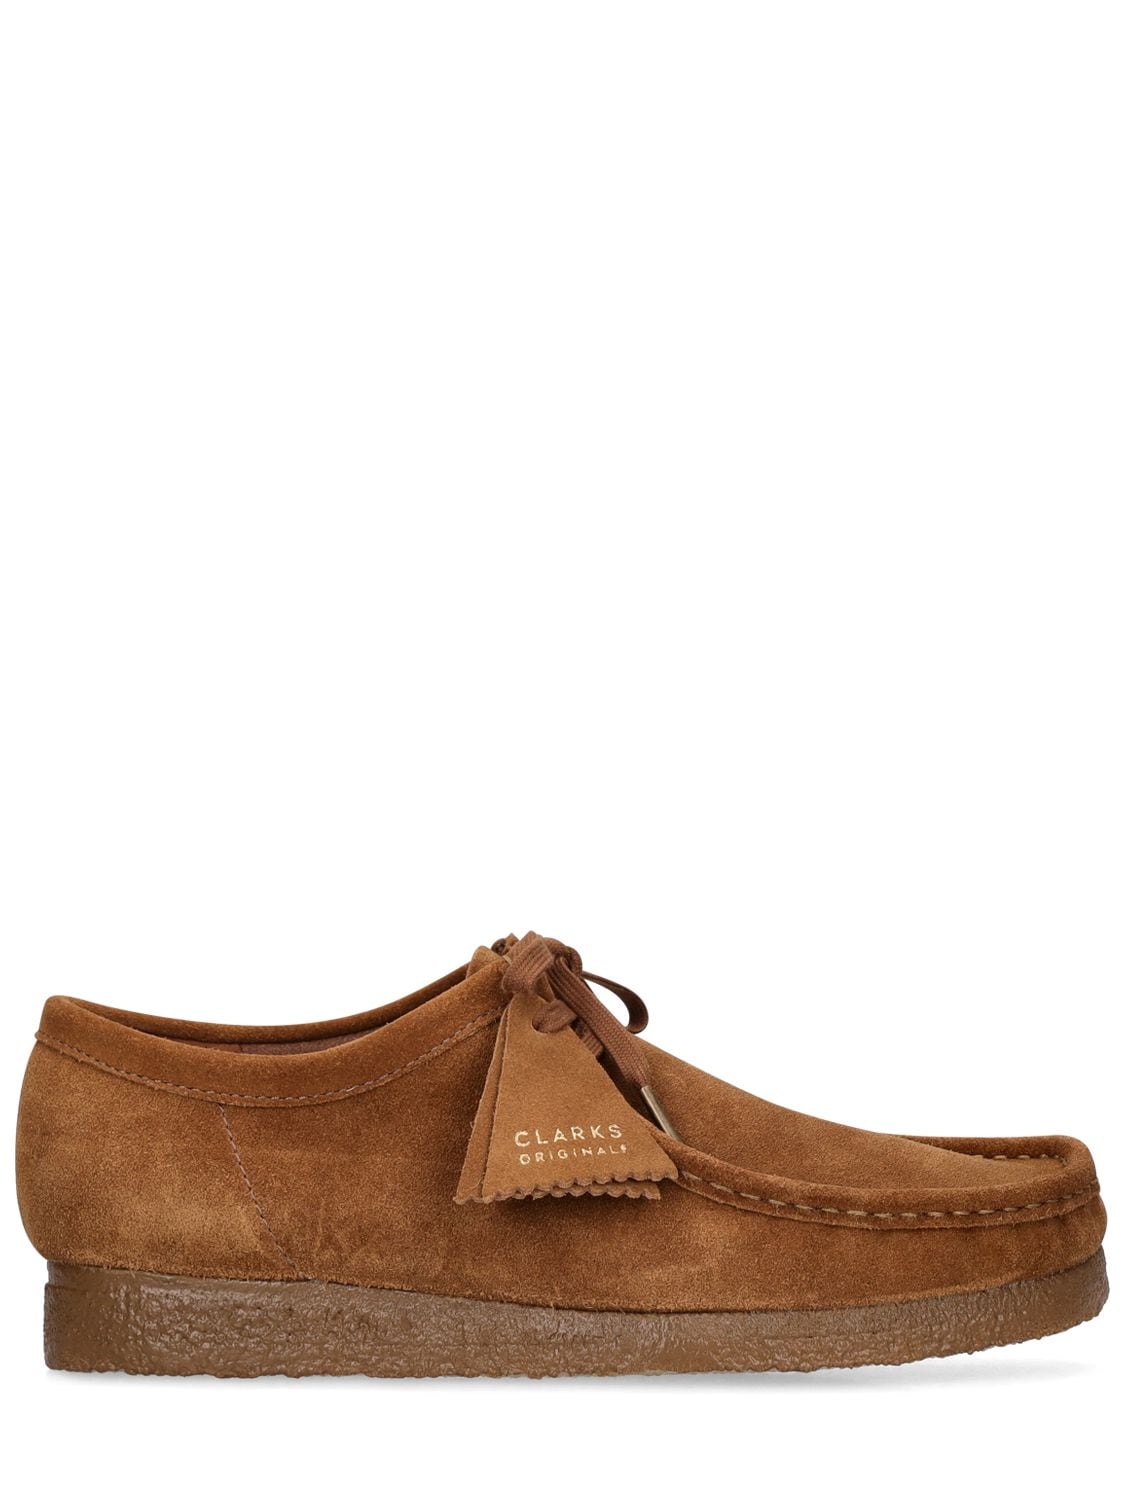 Clarks Originals Wallabee Shoes Oak Hairy Suede In Brown | ModeSens